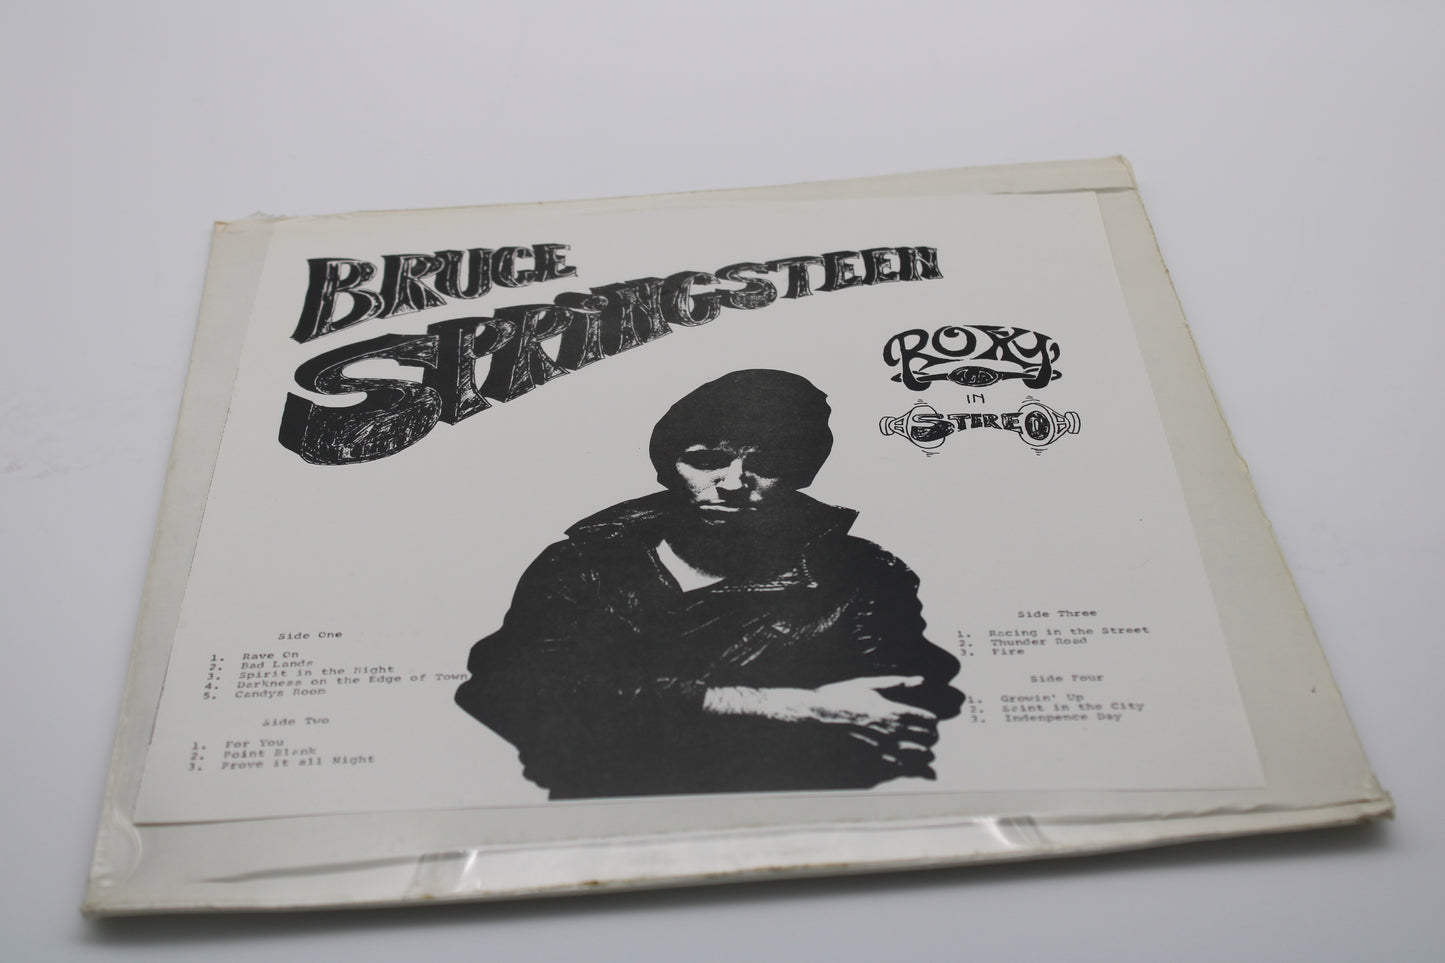 Bruce Springsteen - SEALED - ROXY LA IN STEREO - Live July 7, 1978 - 2 LP Vinyl Records - BLV